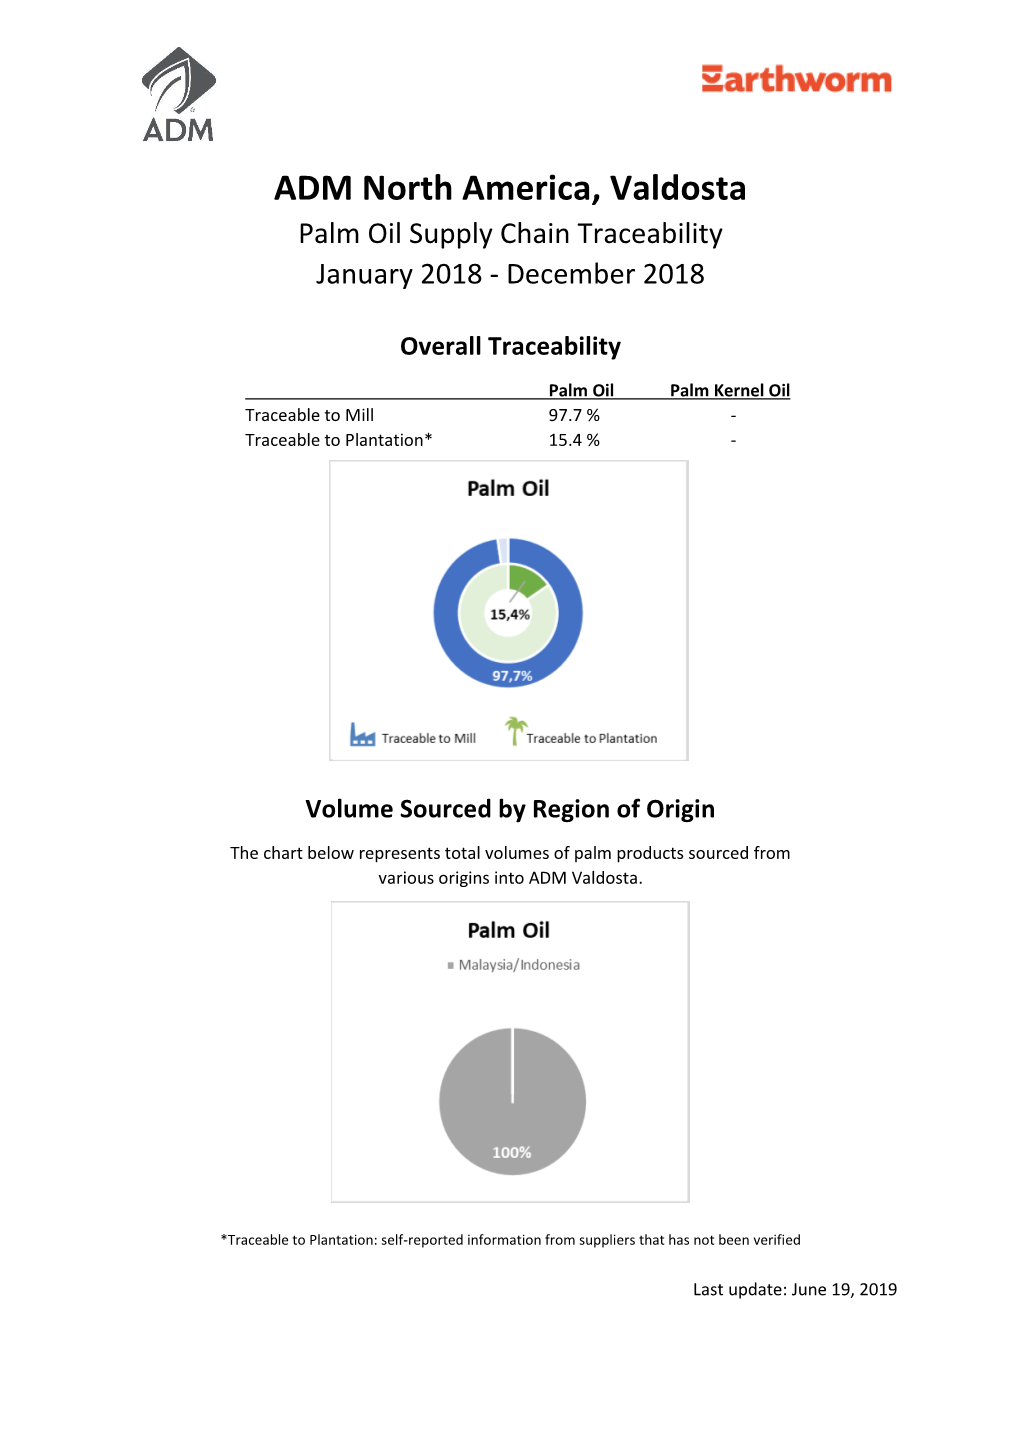 ADM North America, Valdosta Palm Oil Supply Chain Traceability January 2018 - December 2018